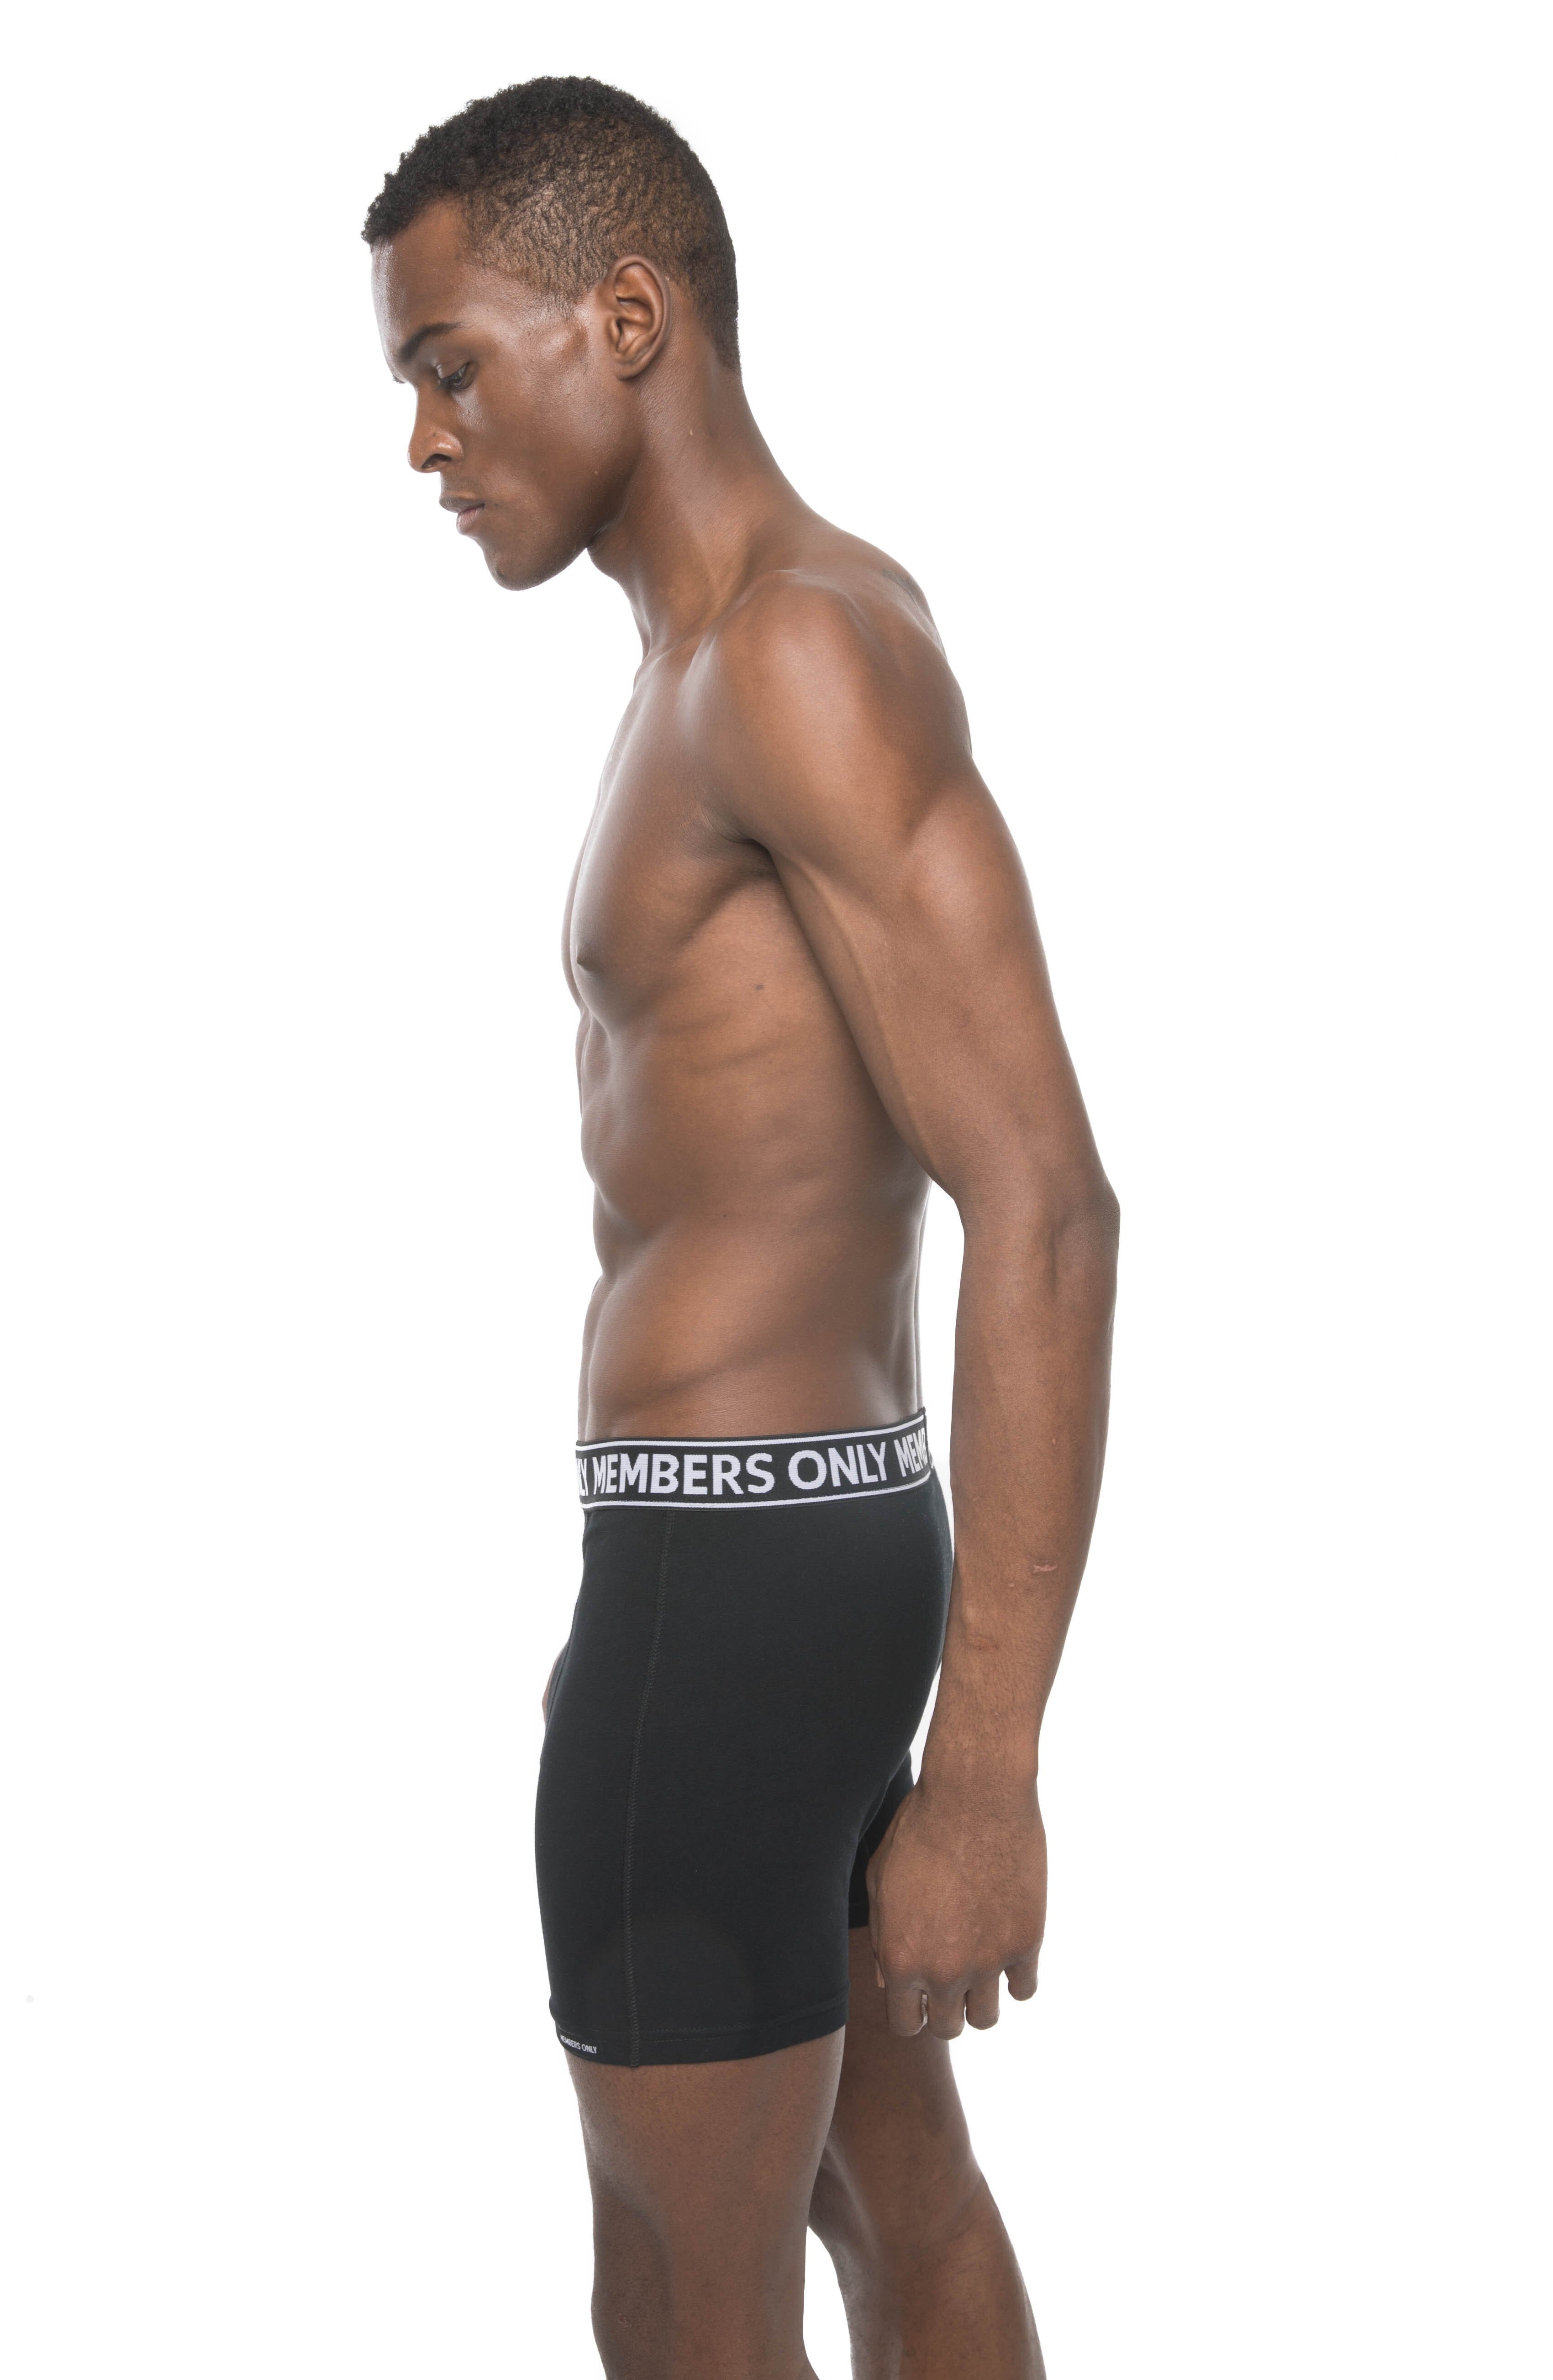 Men's Boxer Briefs – JUMPER Premium Threads